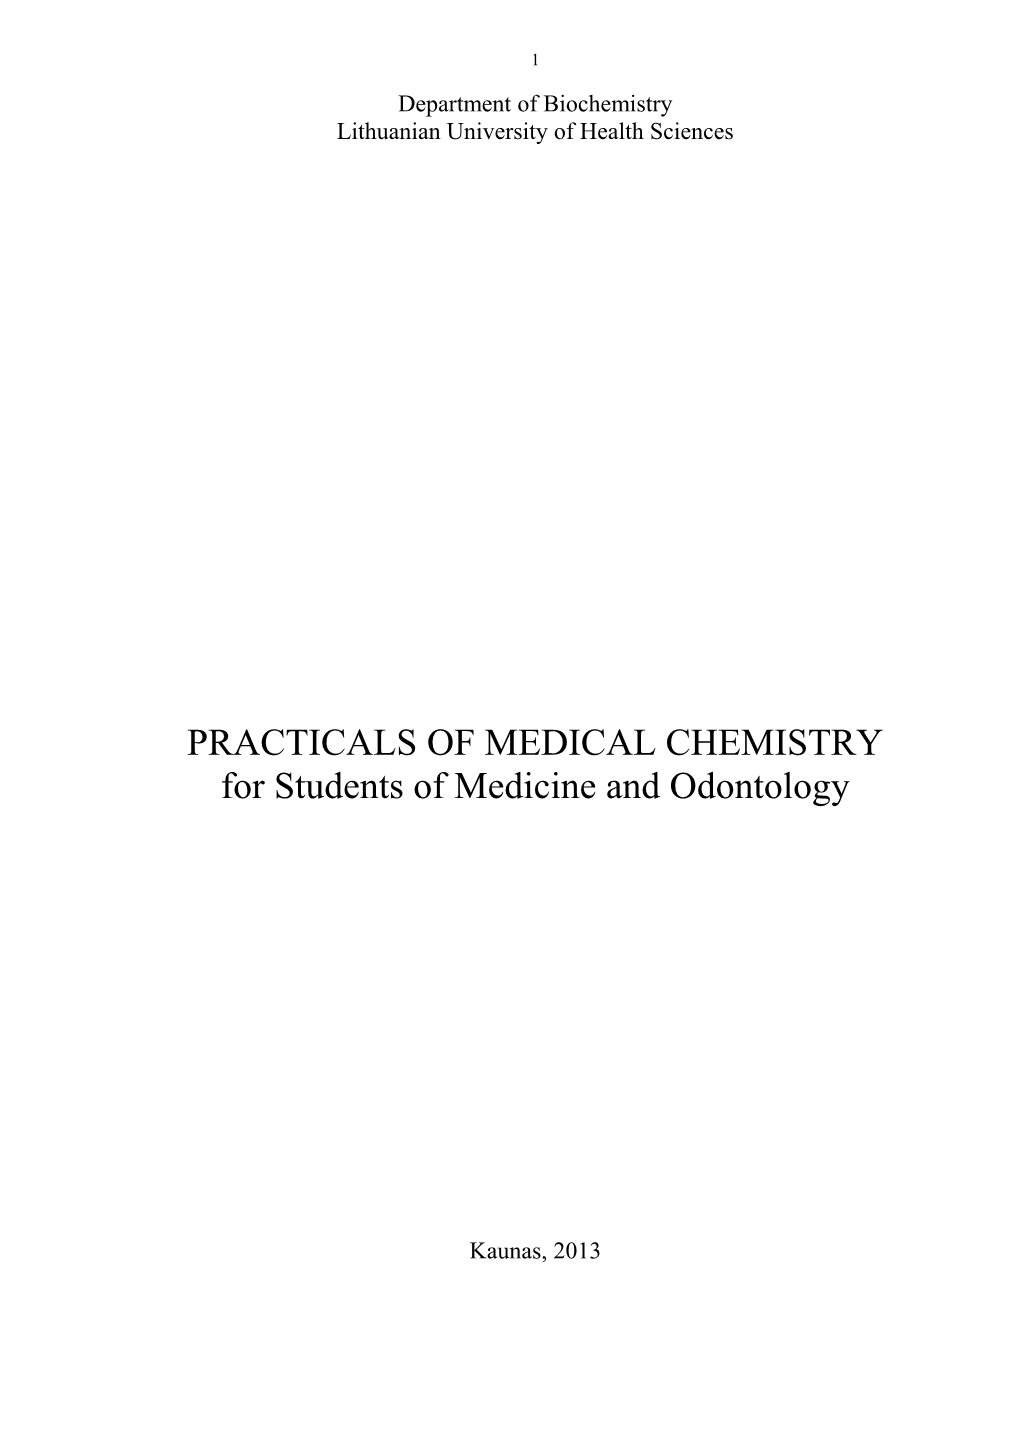 Practicals of Medical Chemistry